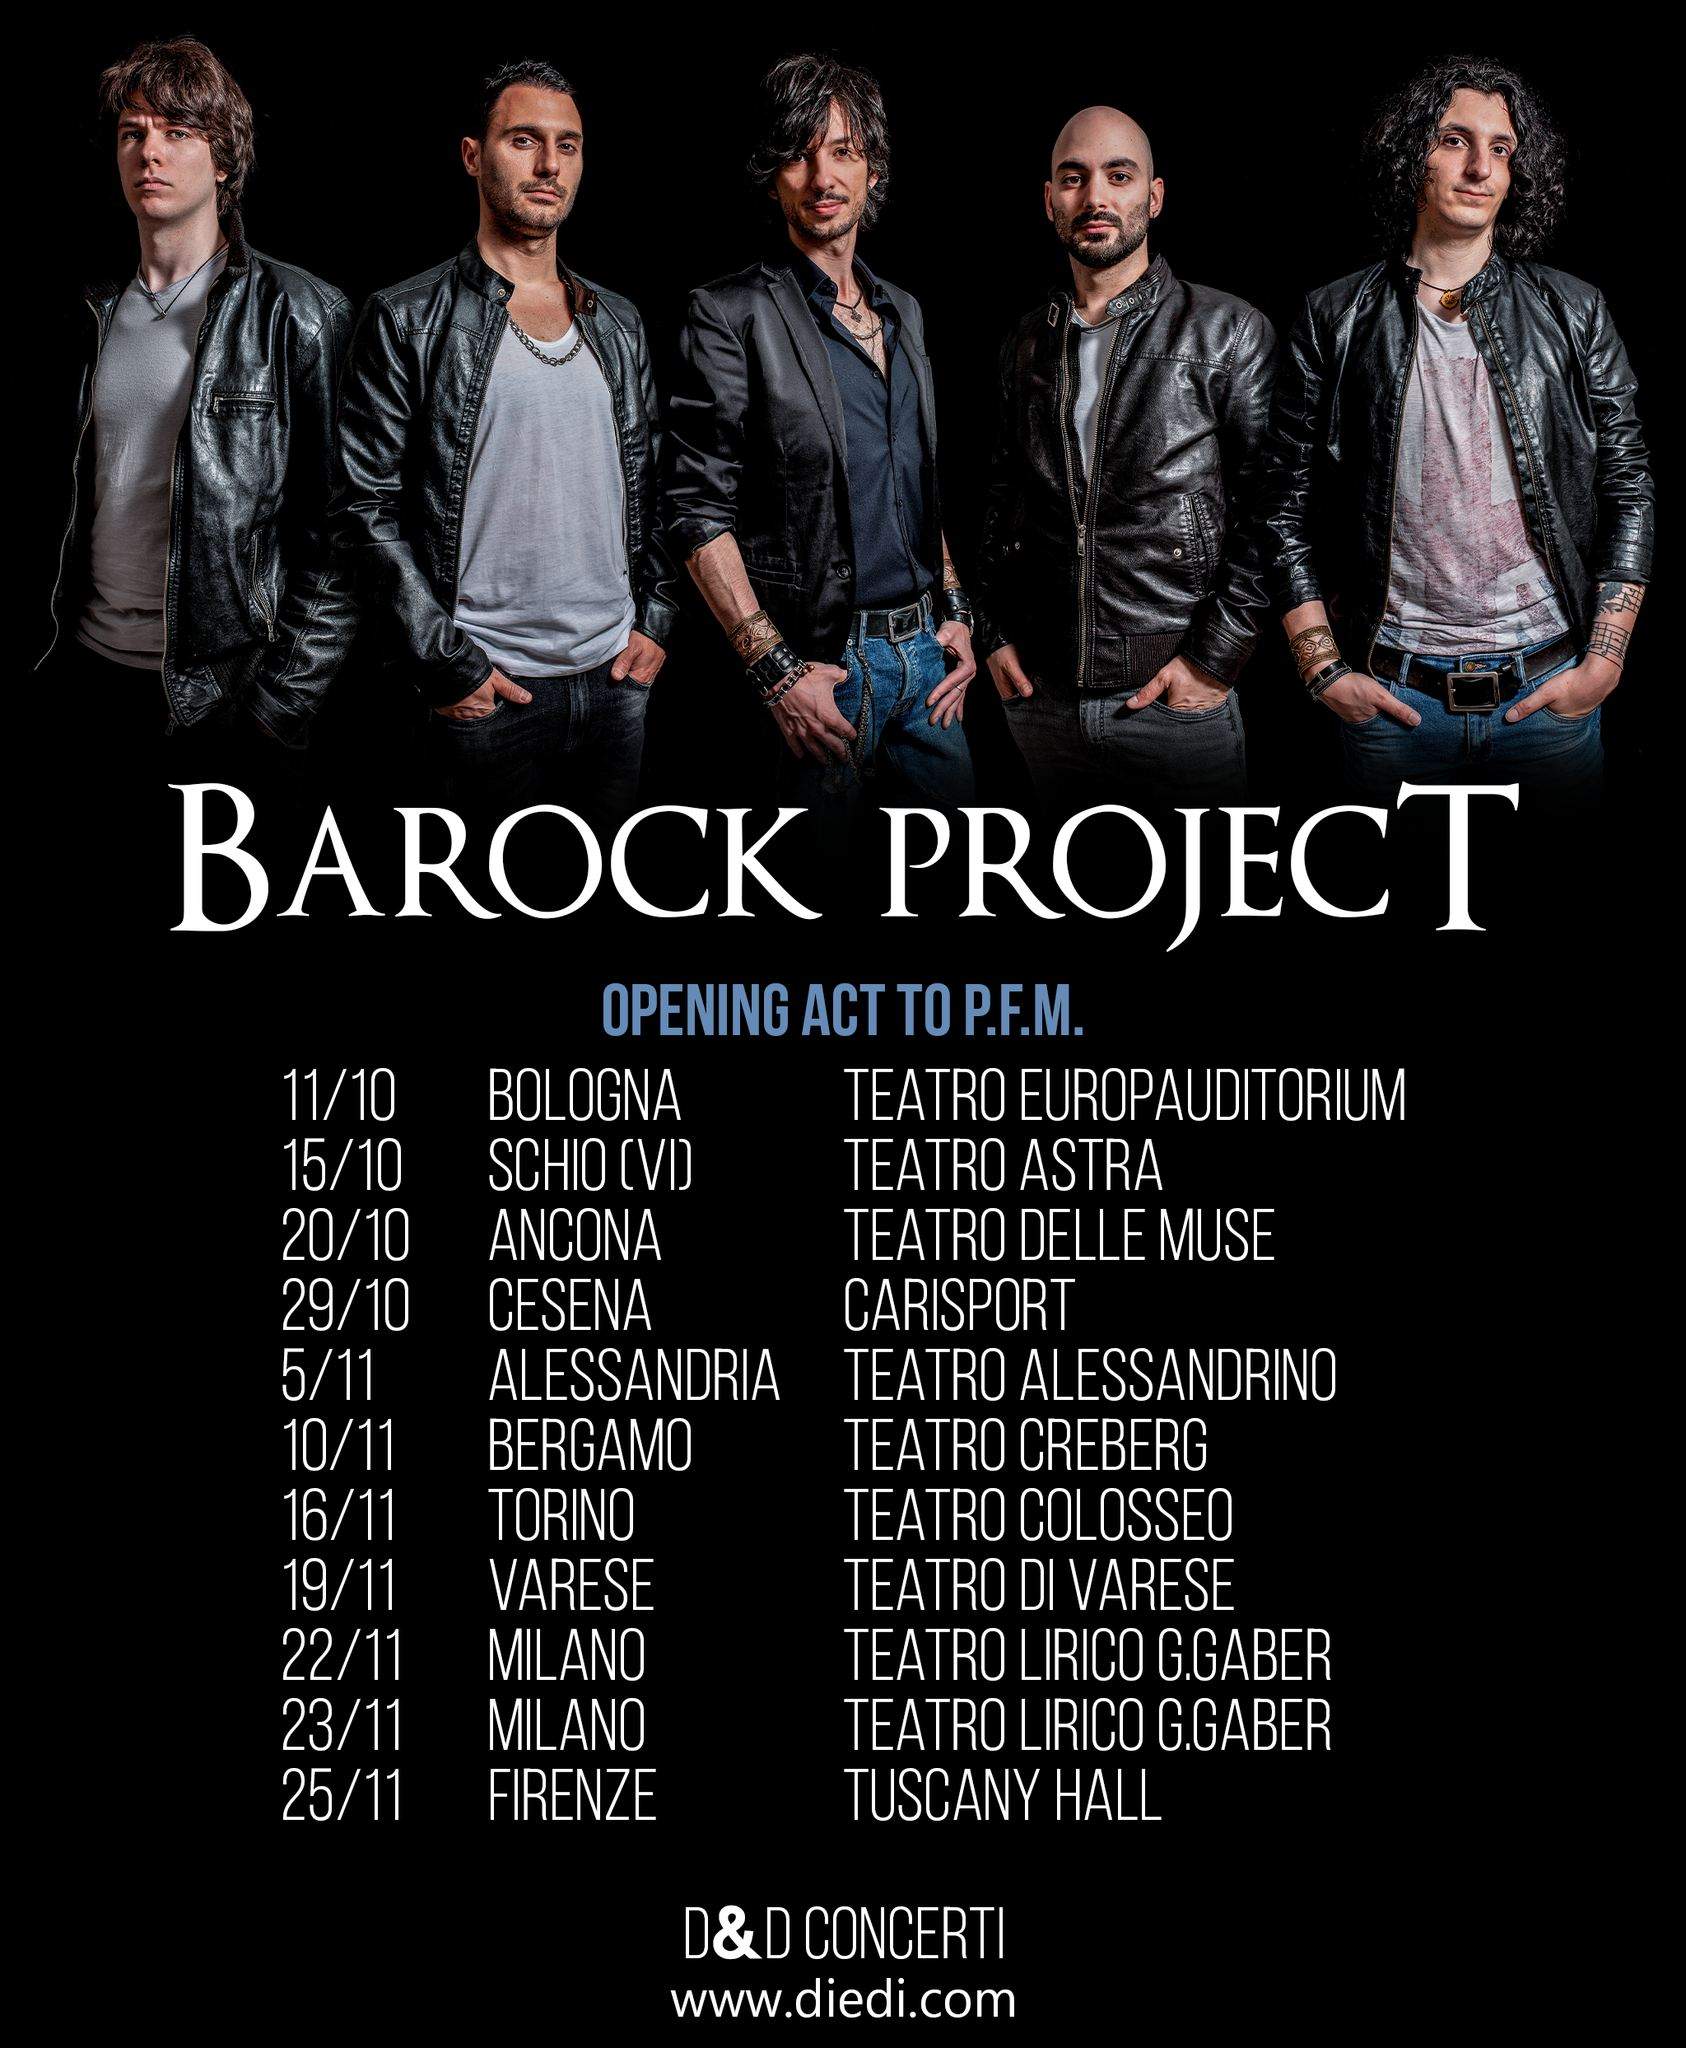 Barock Project - Italian tour with PFM